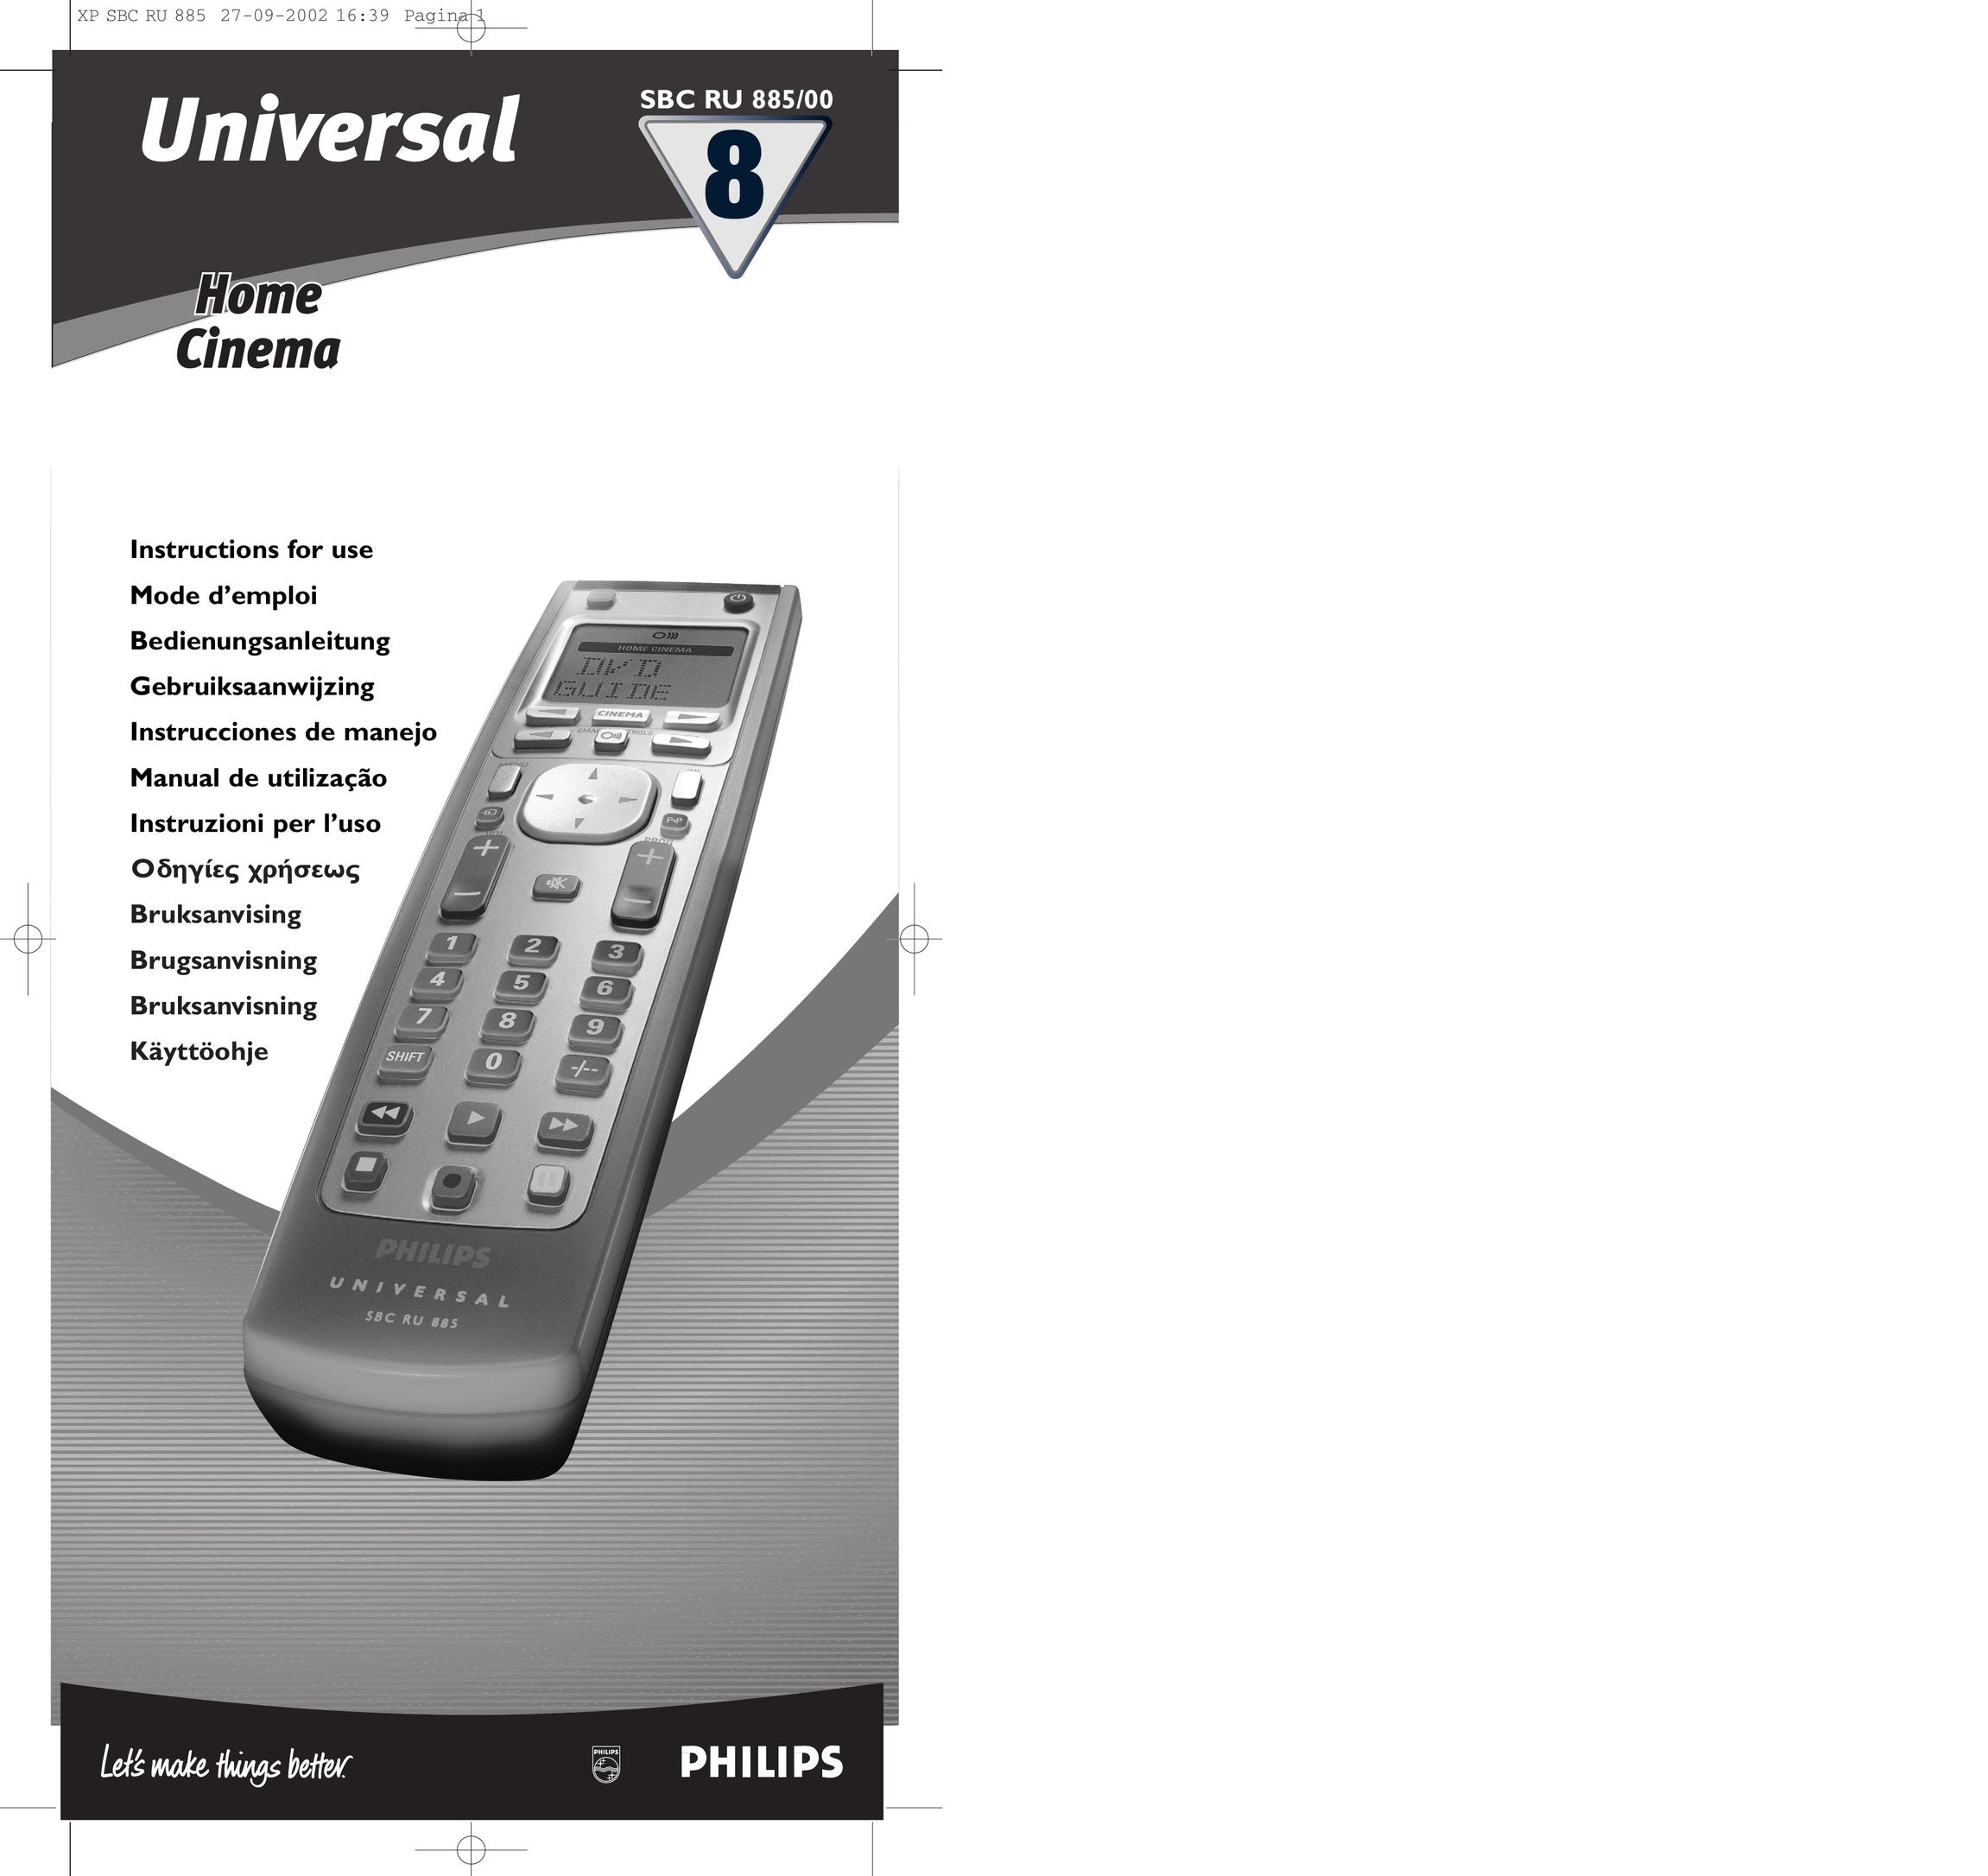 Pioneer SBC RU 885/00 Universal Remote User Manual